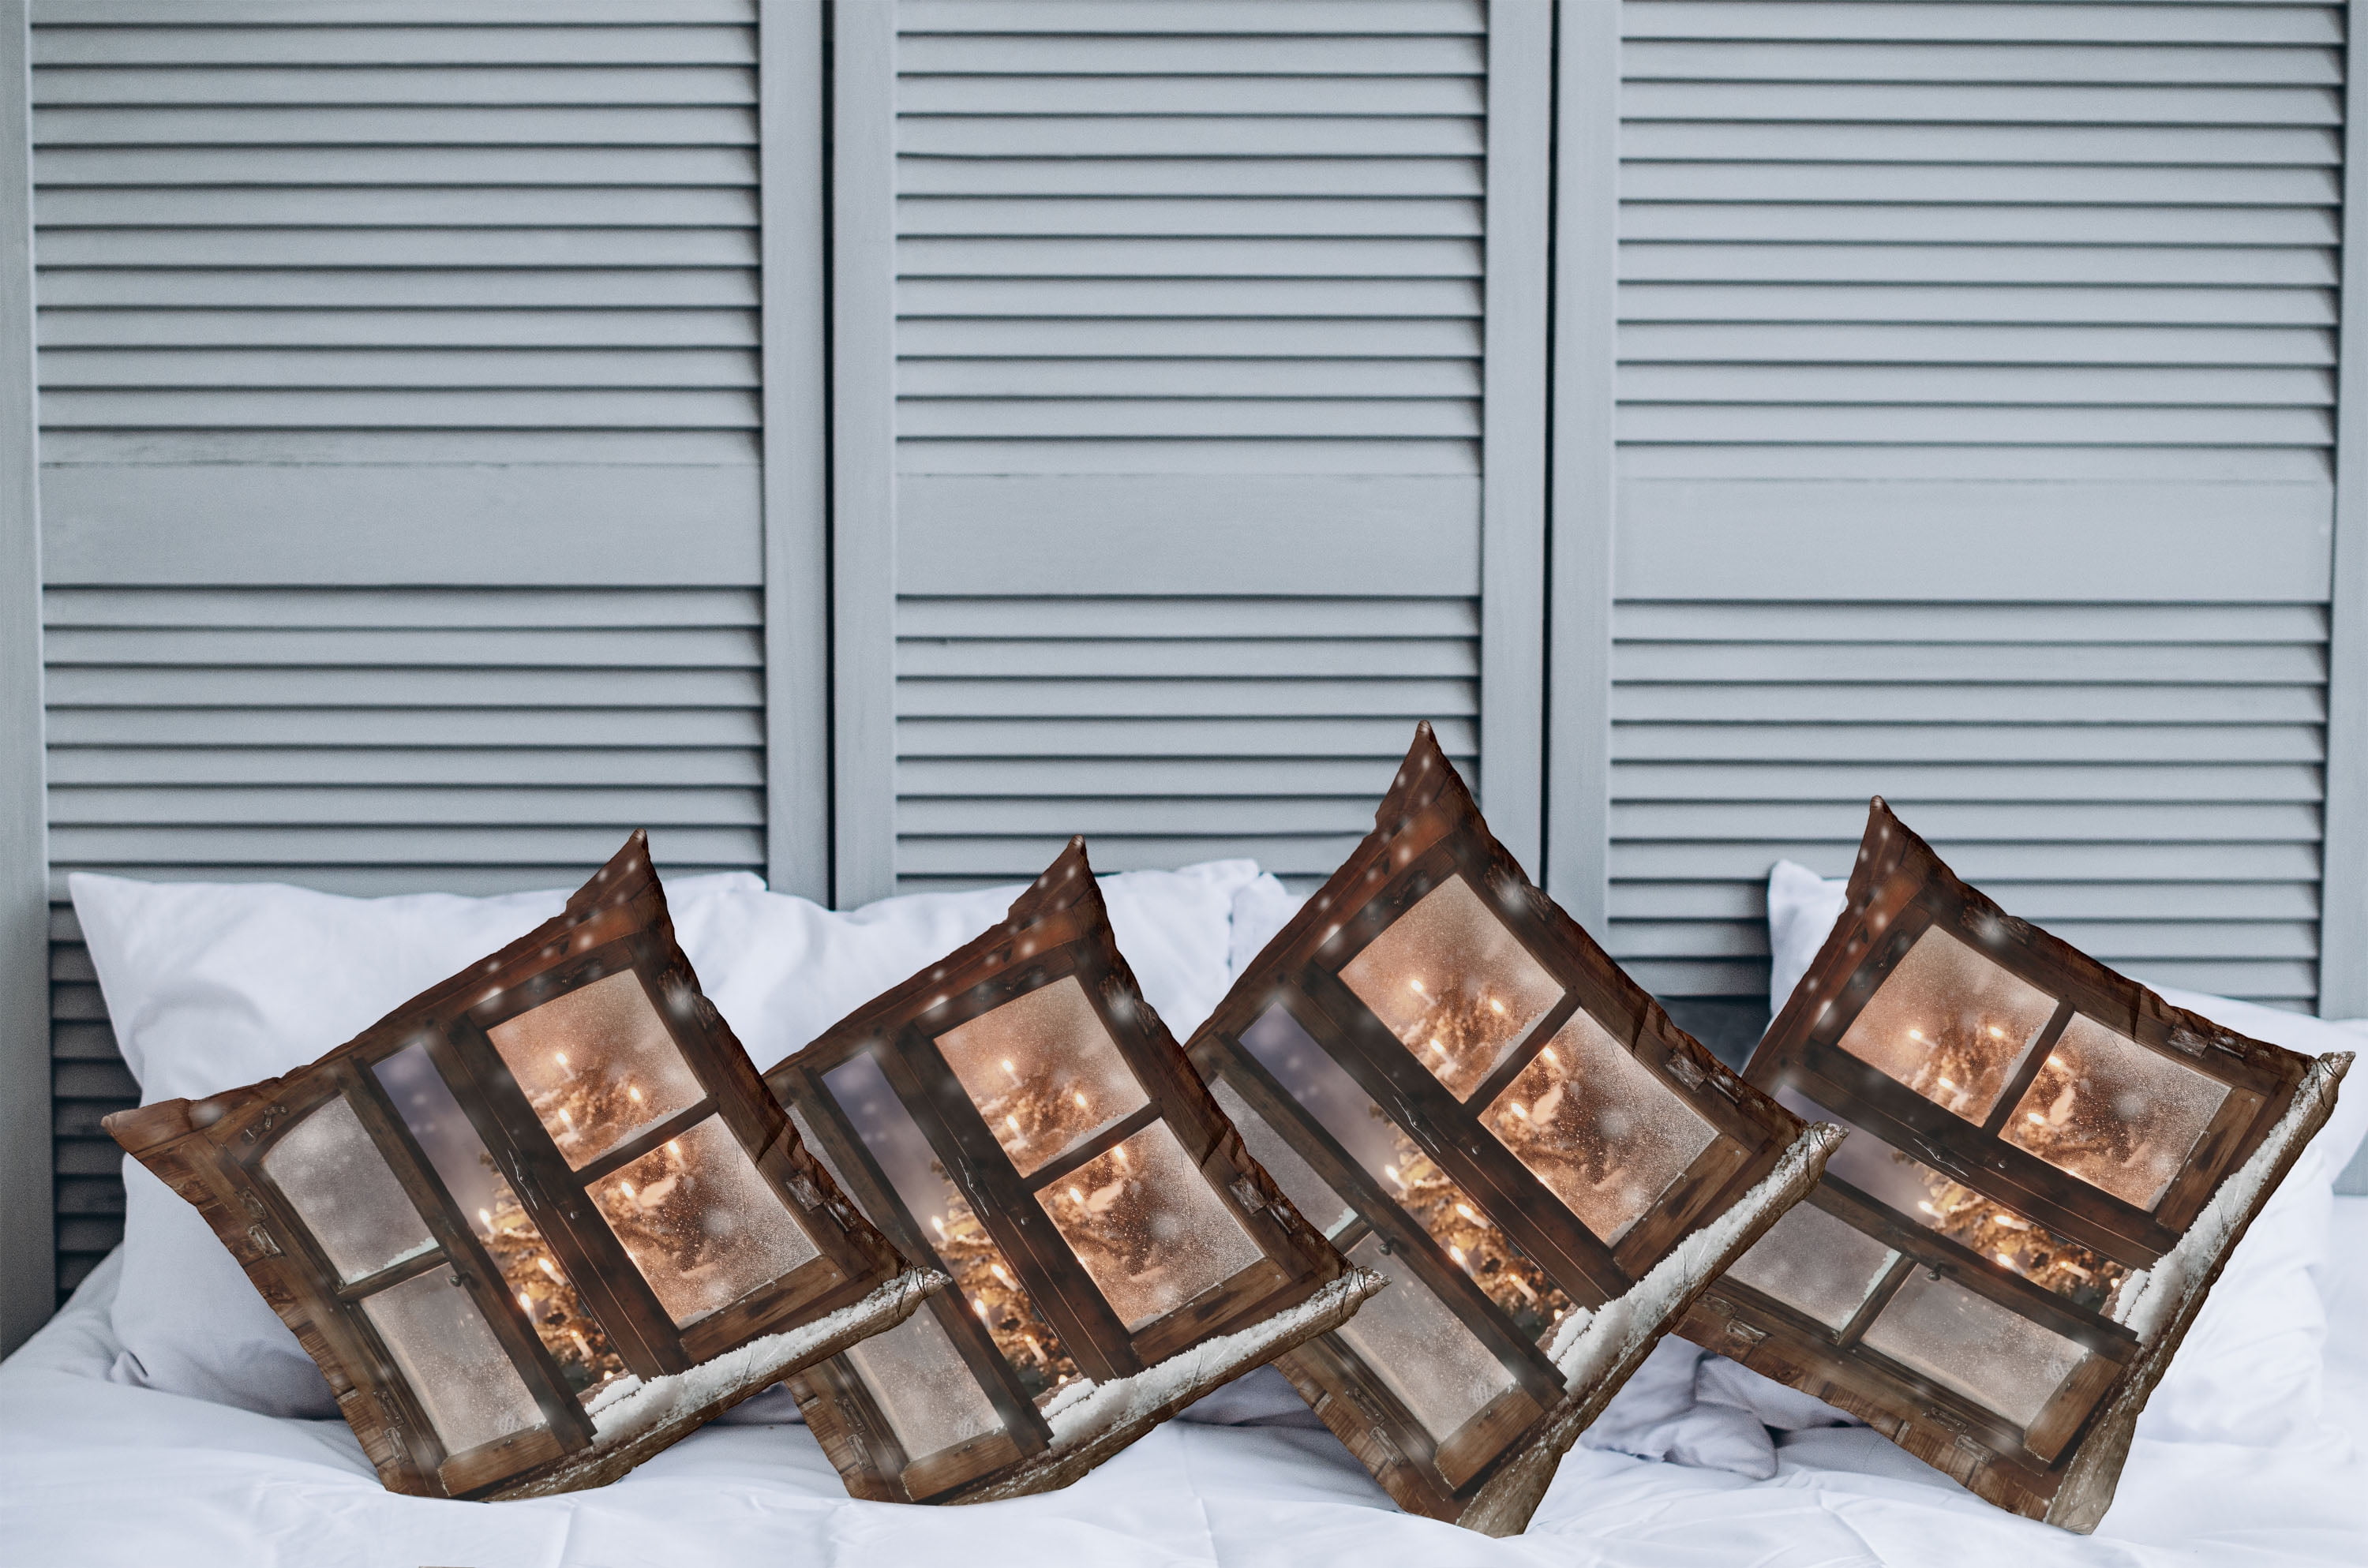 Decorative Pillow Coverbirds Cushion Casesconce Throw Pillowbedding Home  Decorhousewarming Gift Ideaswelcome Winter Home Decor 